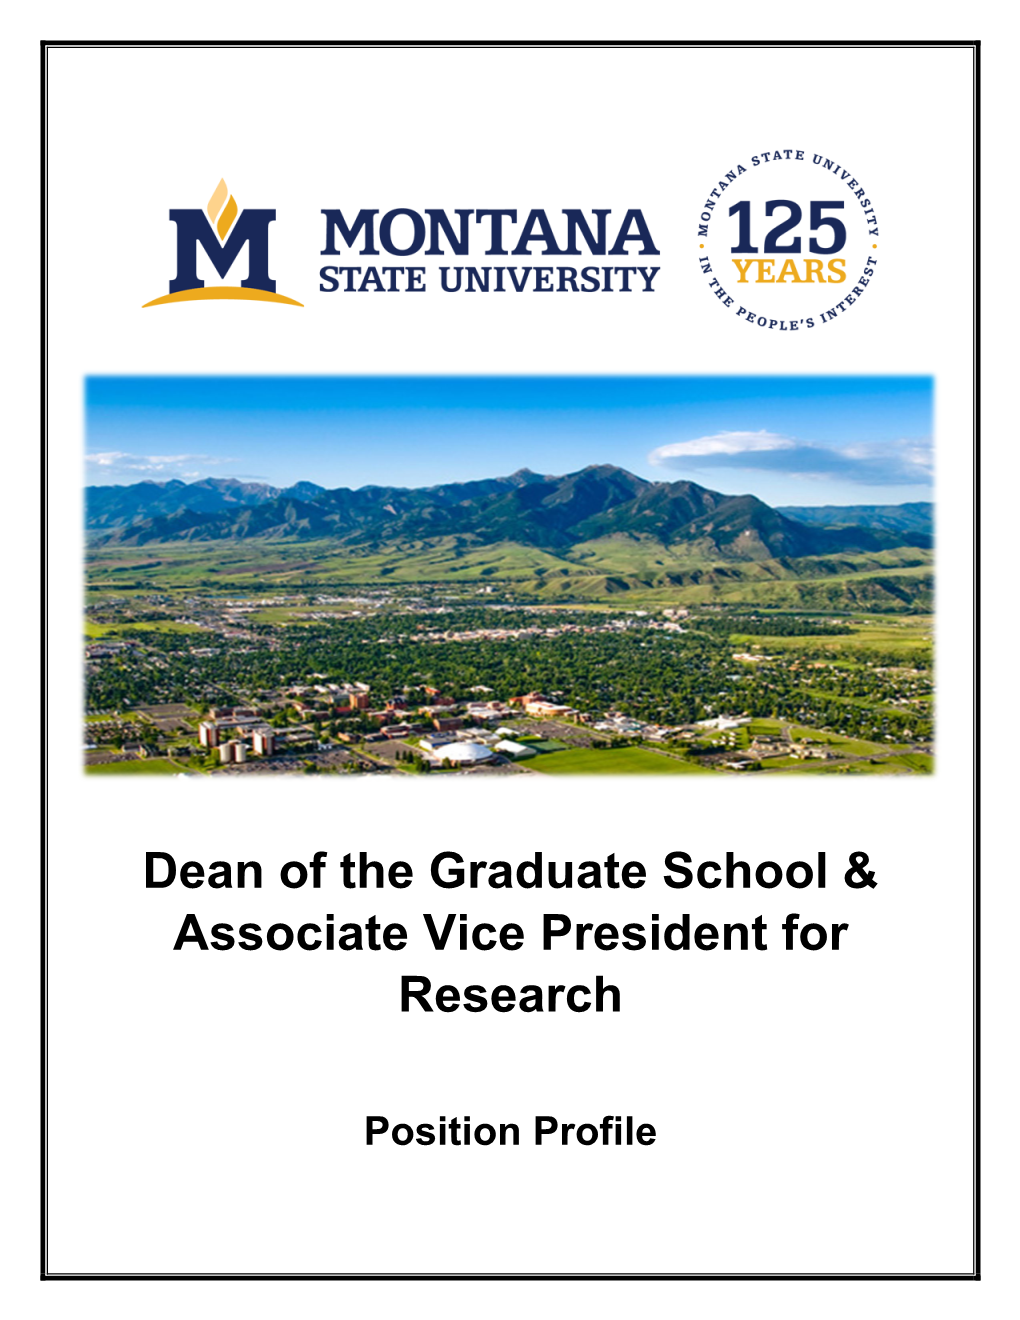 Dean of the Graduate School & Associate Vice President For